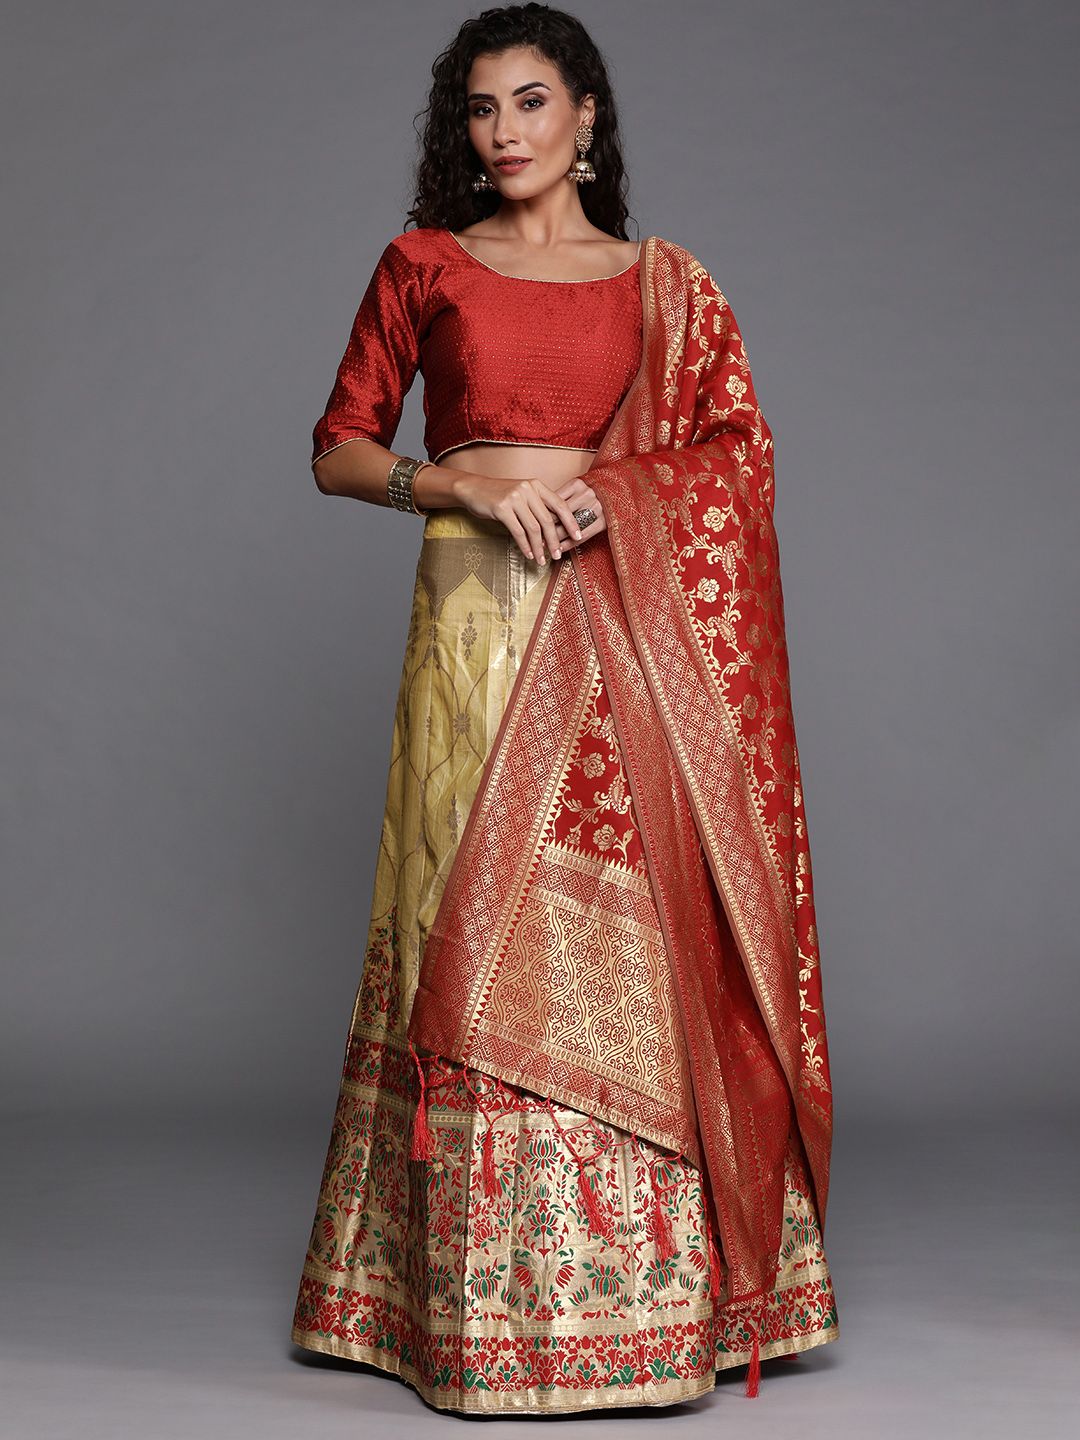 Mitera Beige & Gold-Toned Woven Design Semi-Stitched Lehenga Choli Price in India